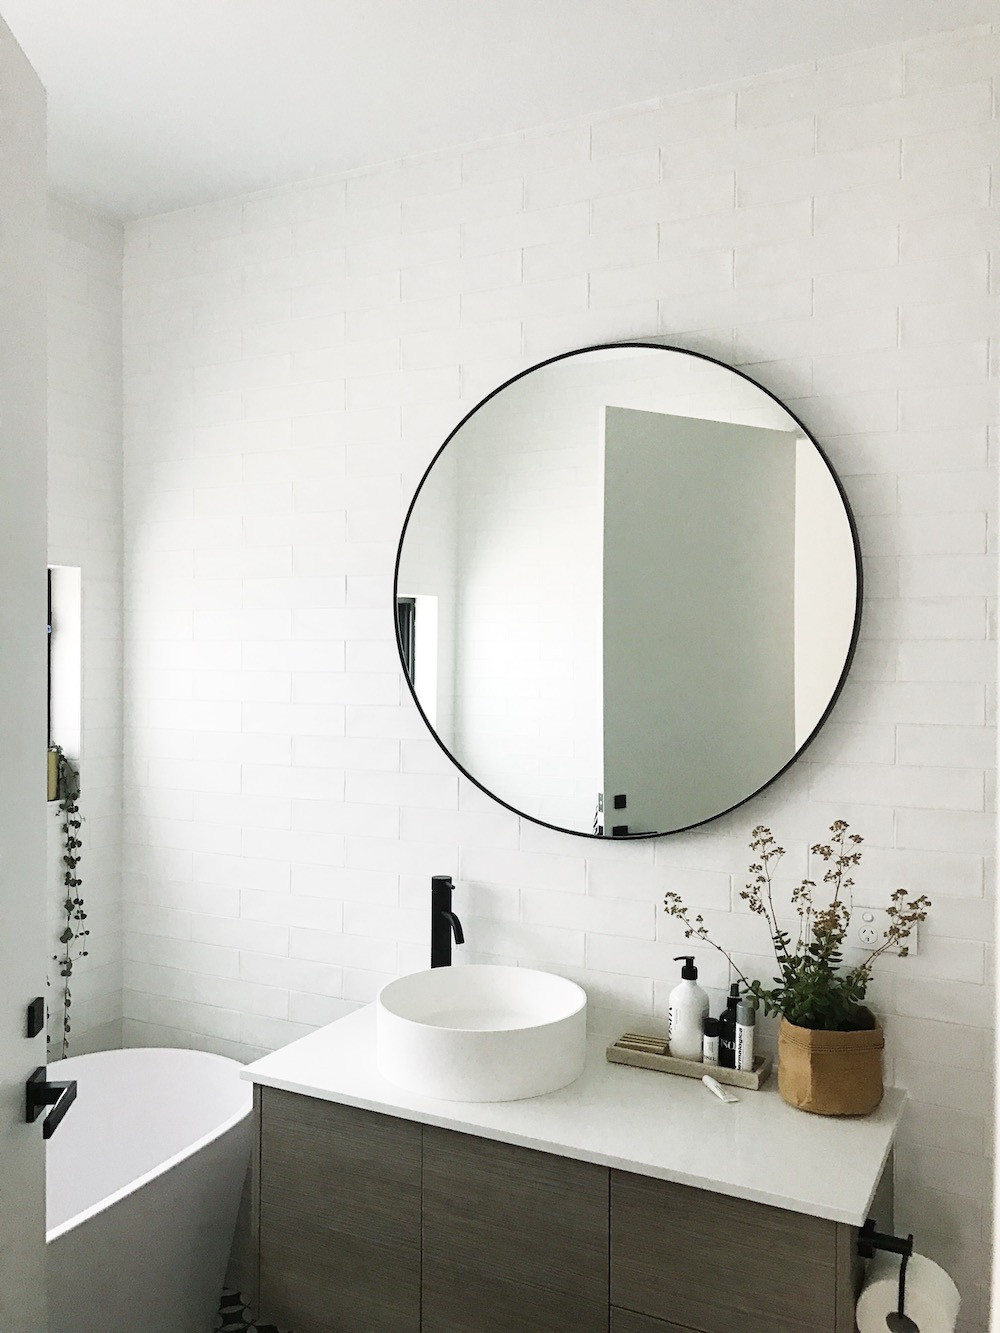 Circular Bathroom Mirror
 Gina s home Black and white bathroom reveal STYLE CURATOR